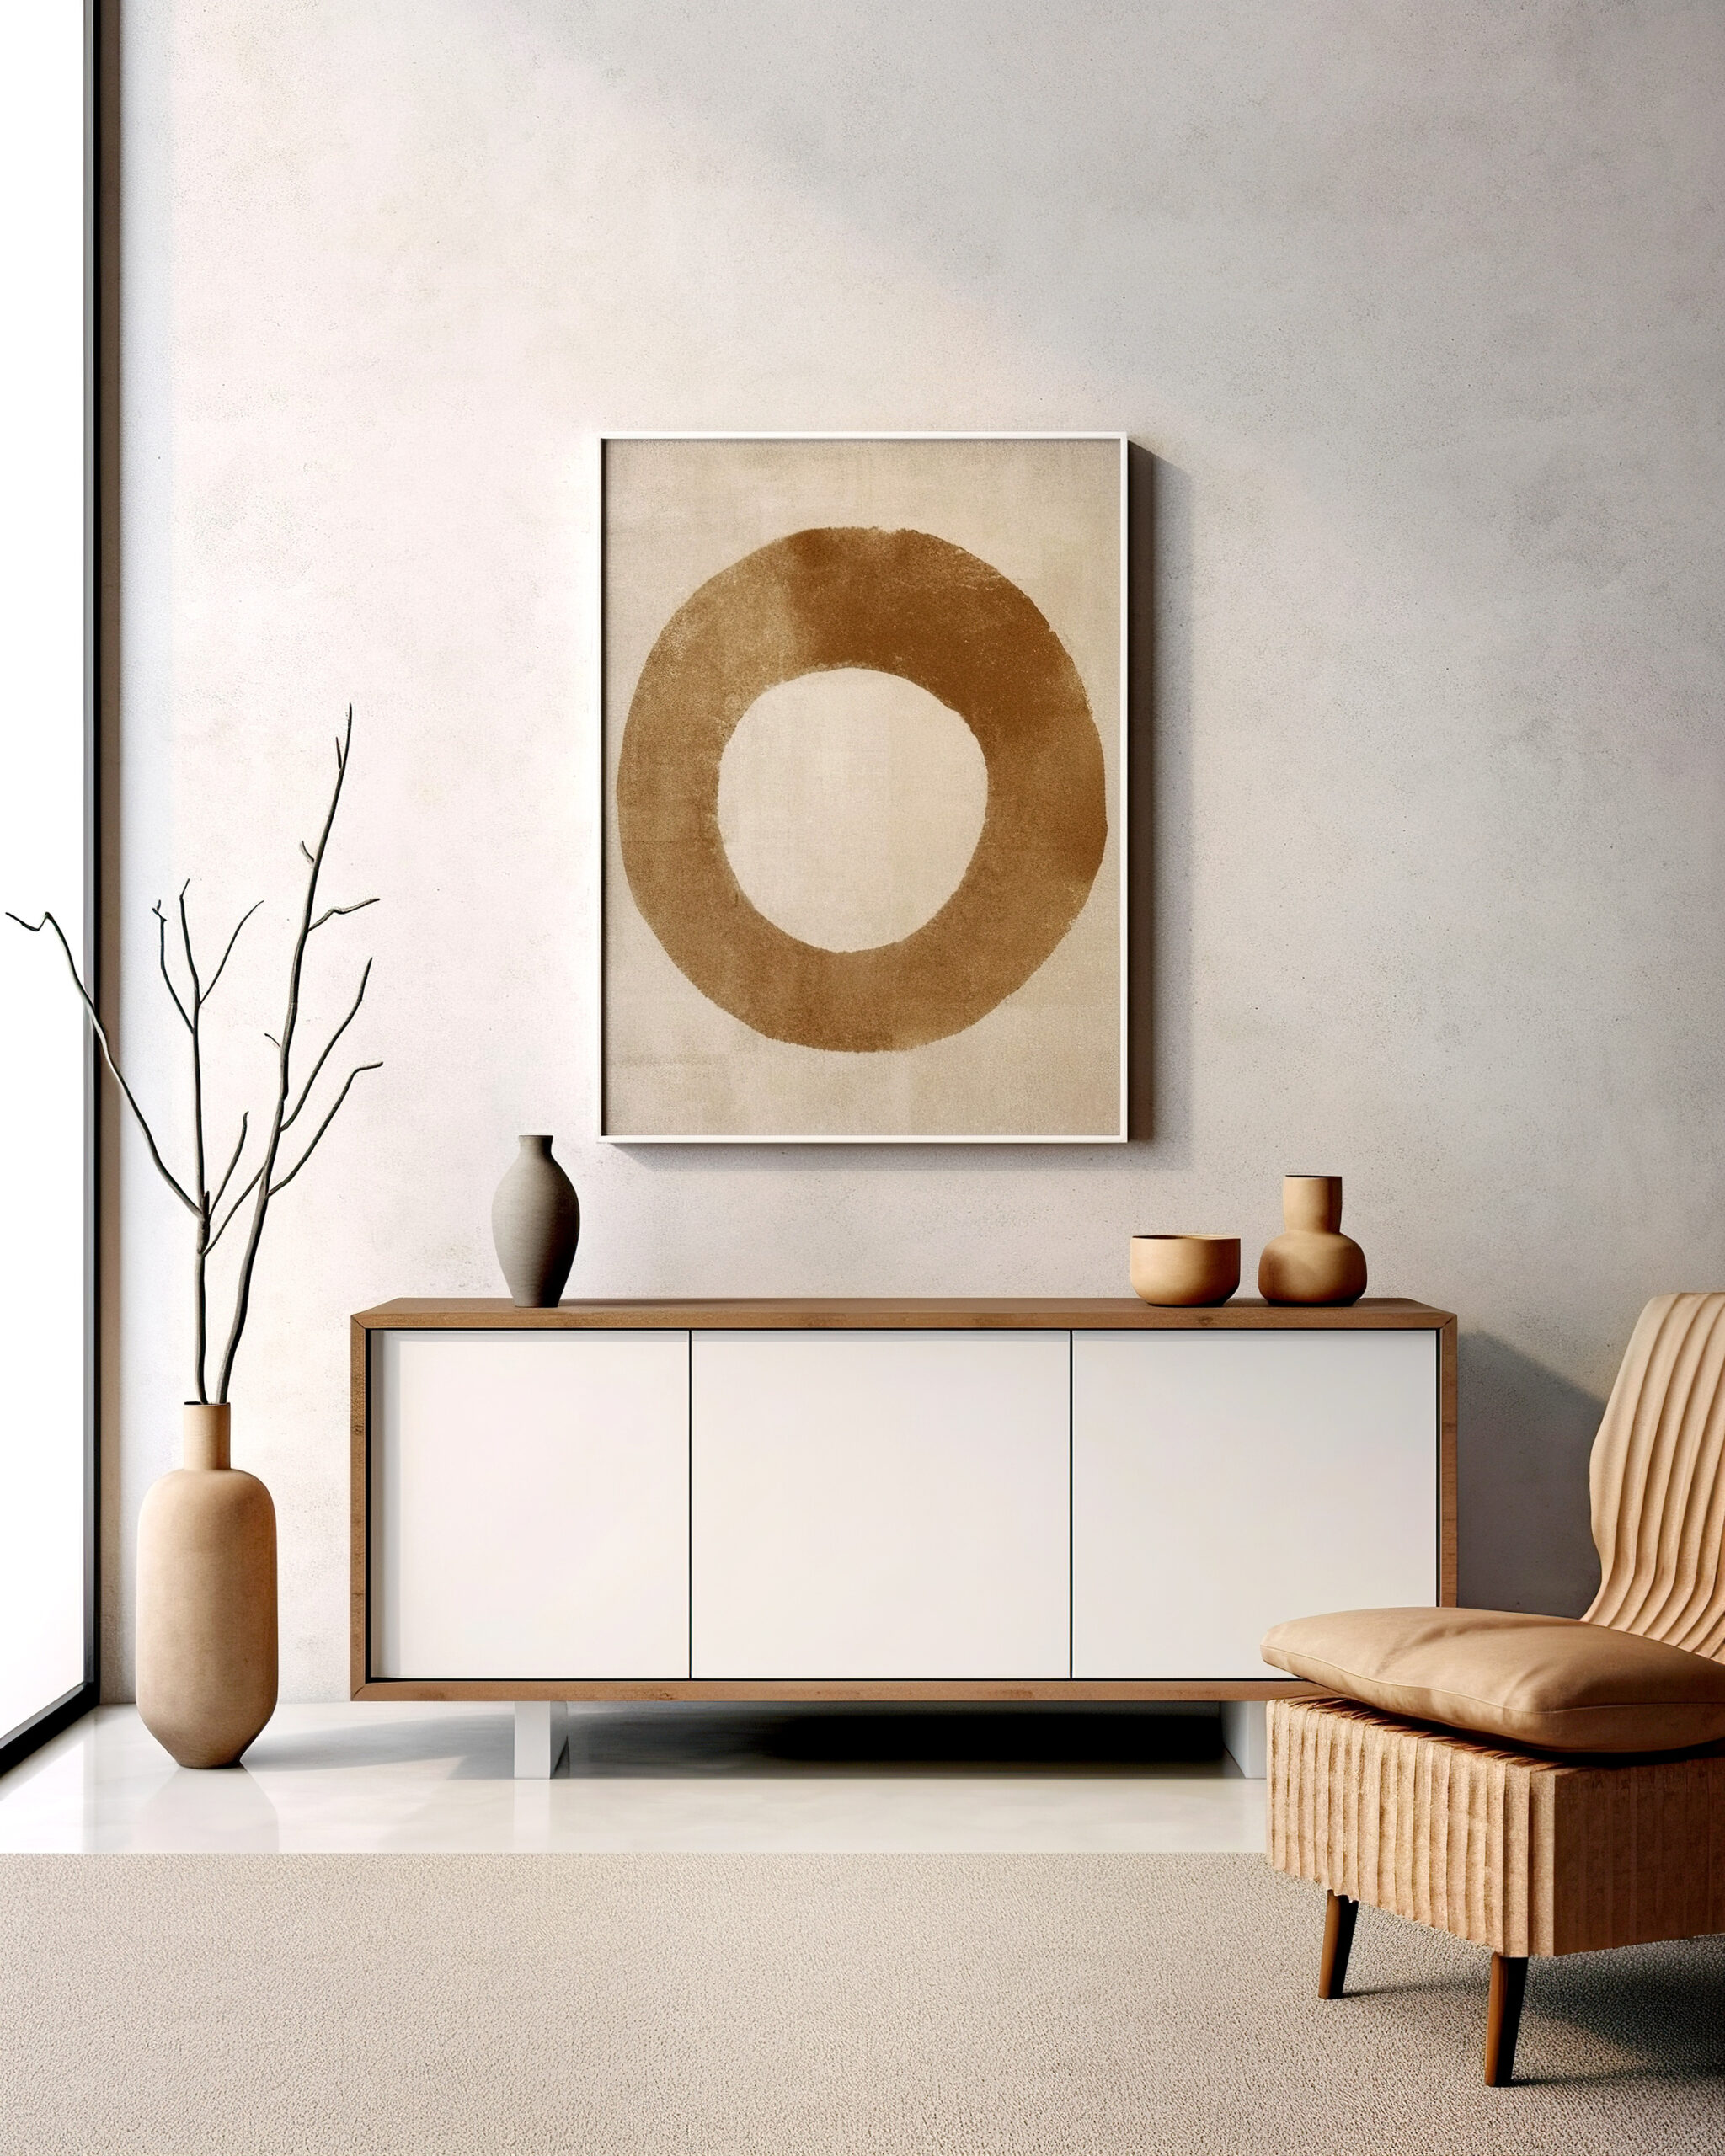 Wooden dresser and art poster on concrete wall. Scandinavian home interior design of modern living room.